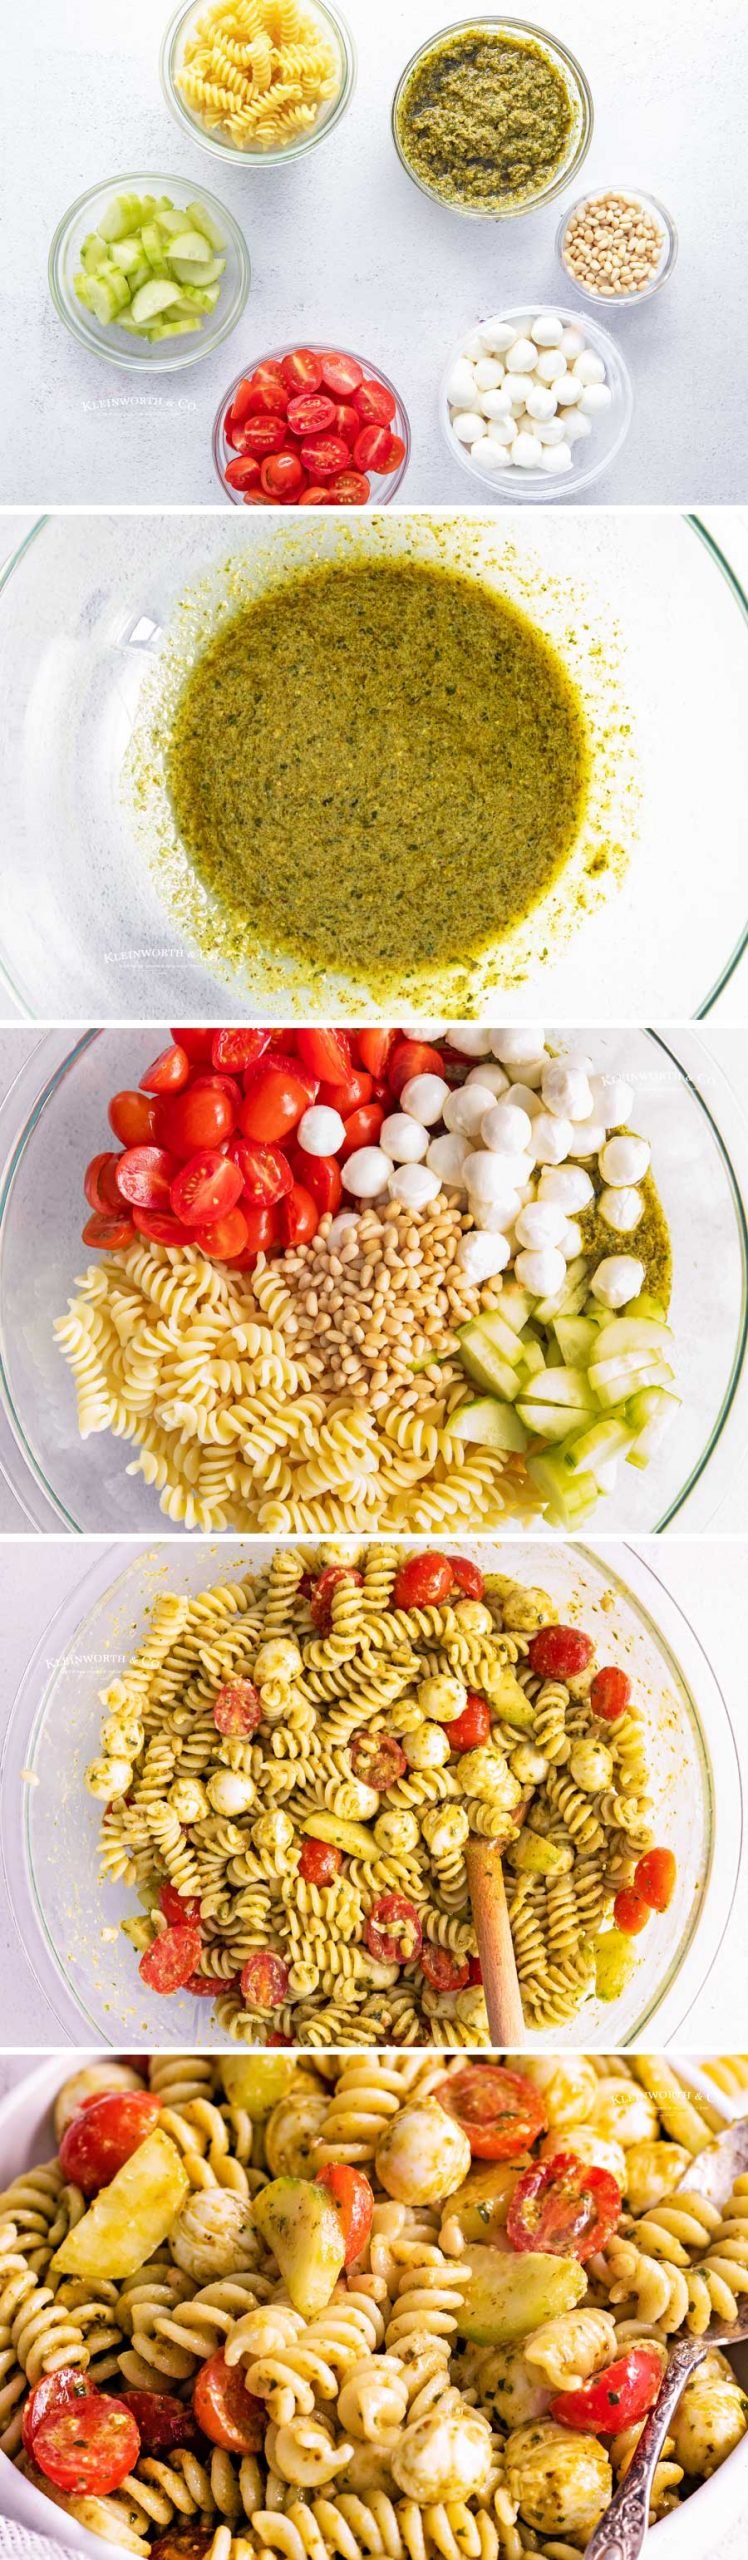 how to make Pesto Pasta Salad